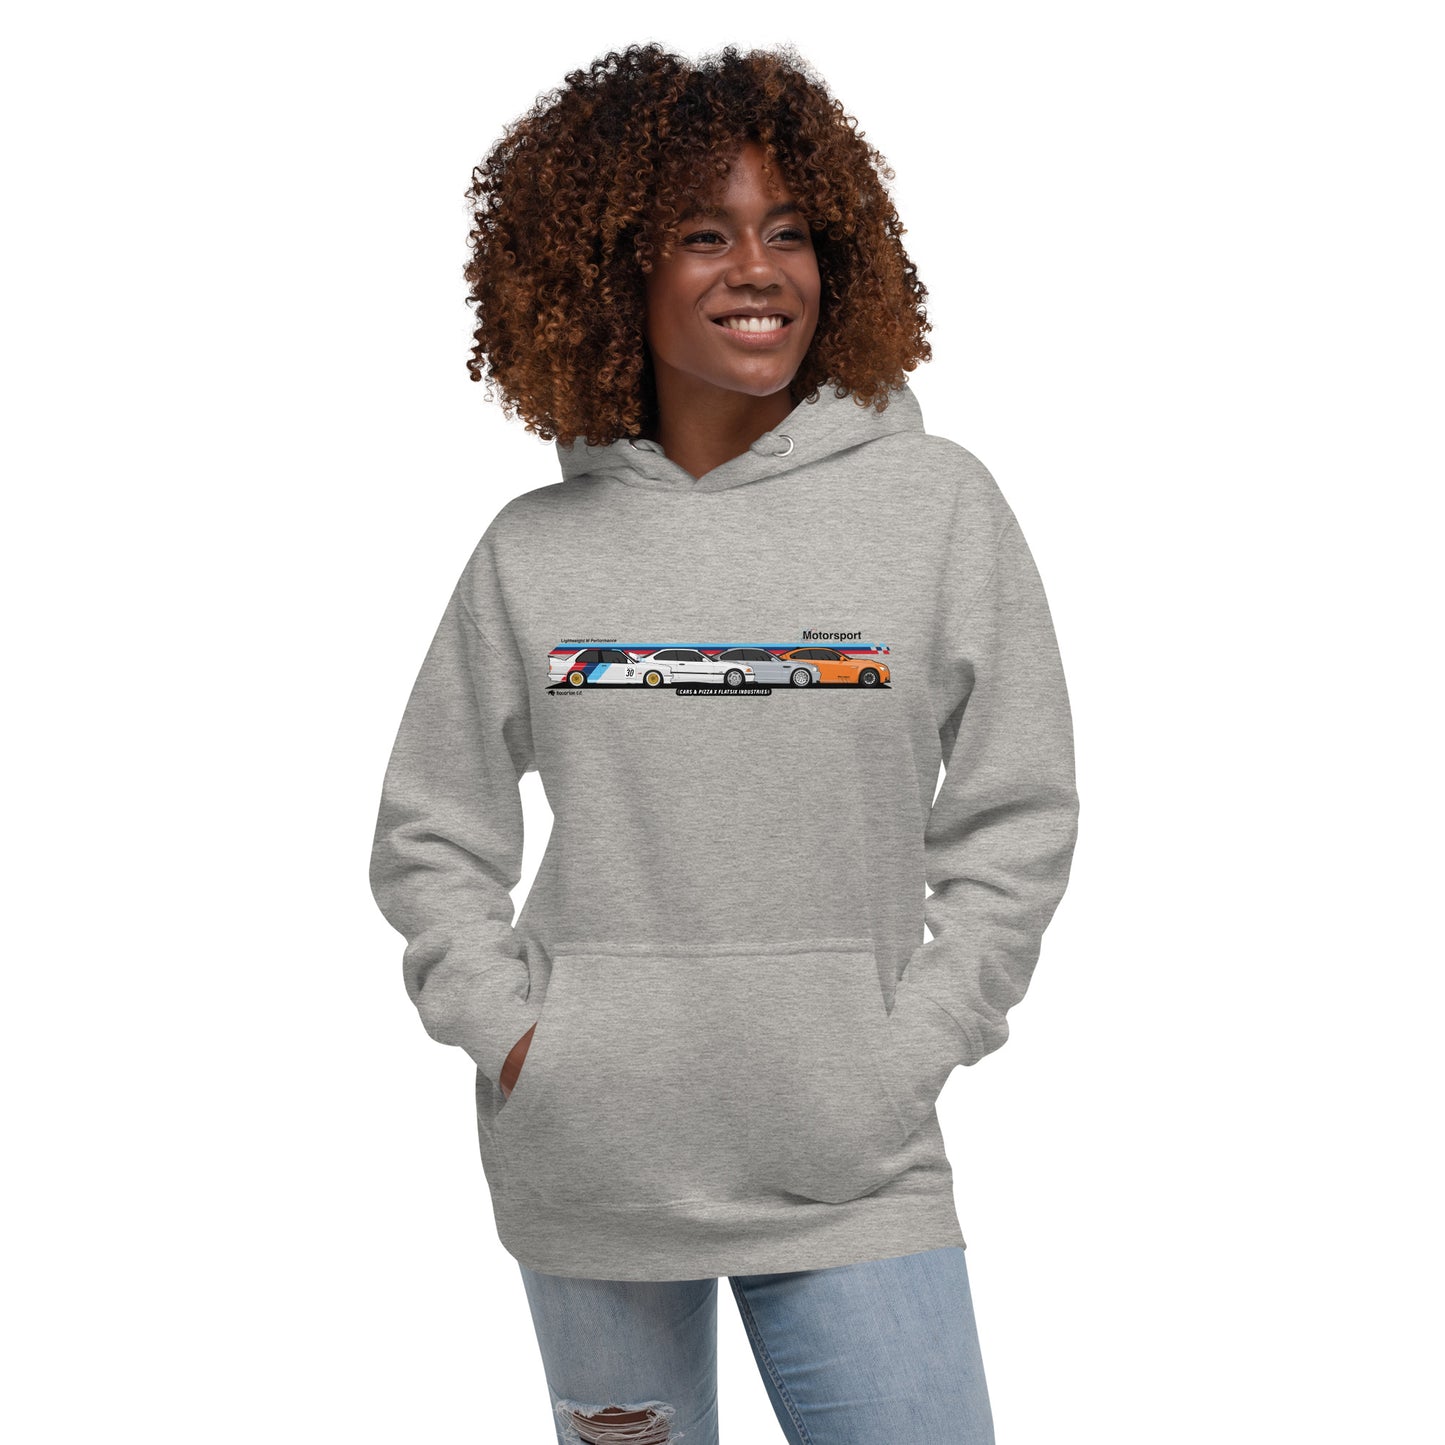 Cars&amp;Pizza BMW M3 "Generation" unisex hooded sweatshirt